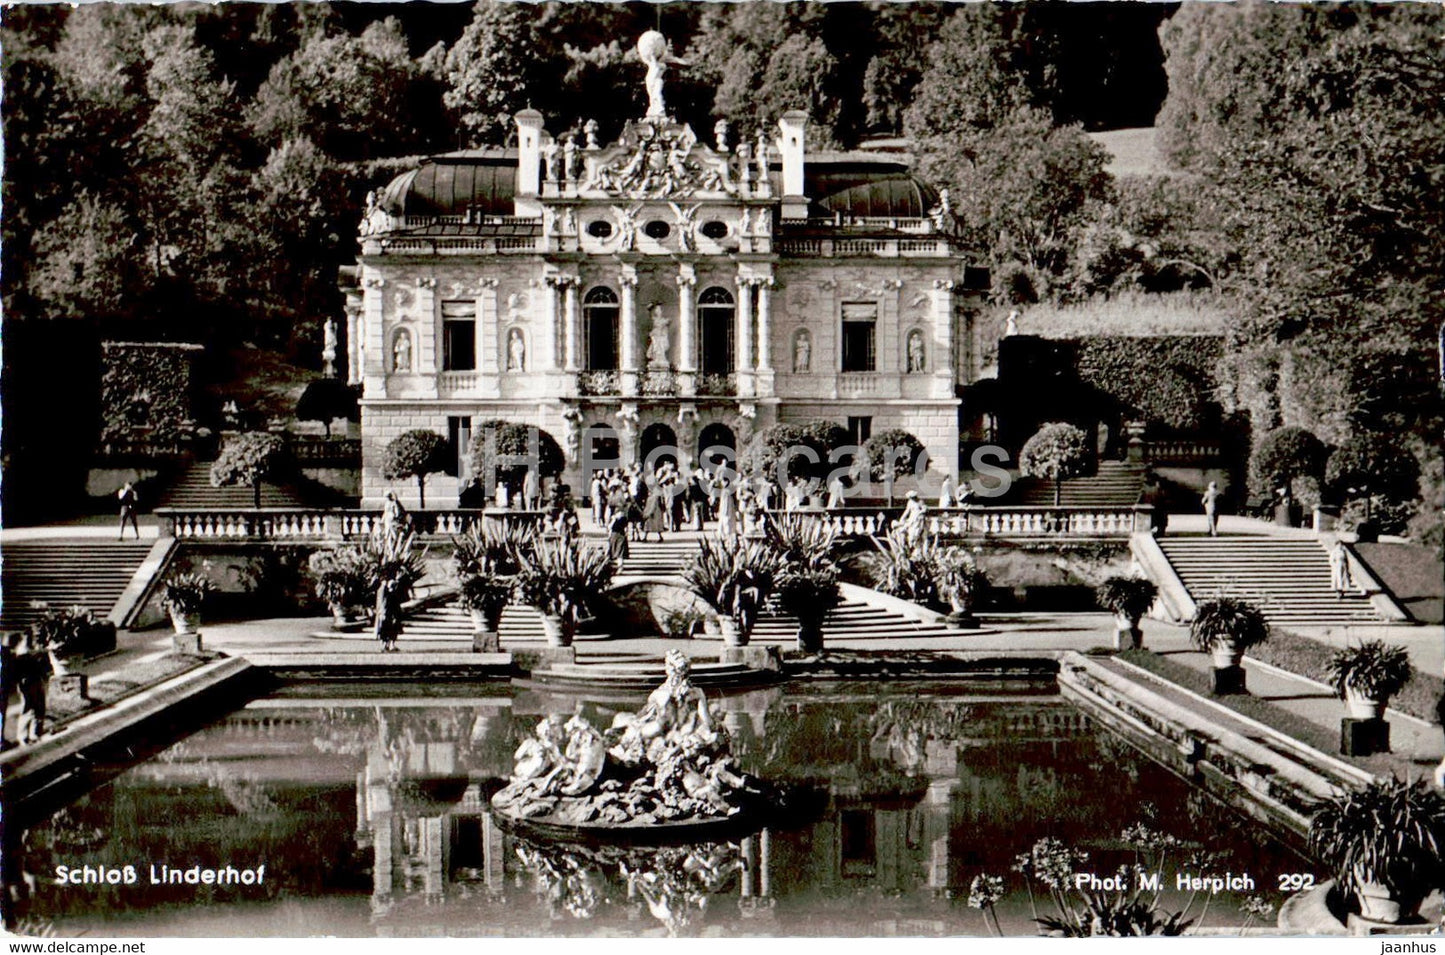 Schloss Linderhof - 292 - castle - old postcard - Germany - unused - JH Postcards